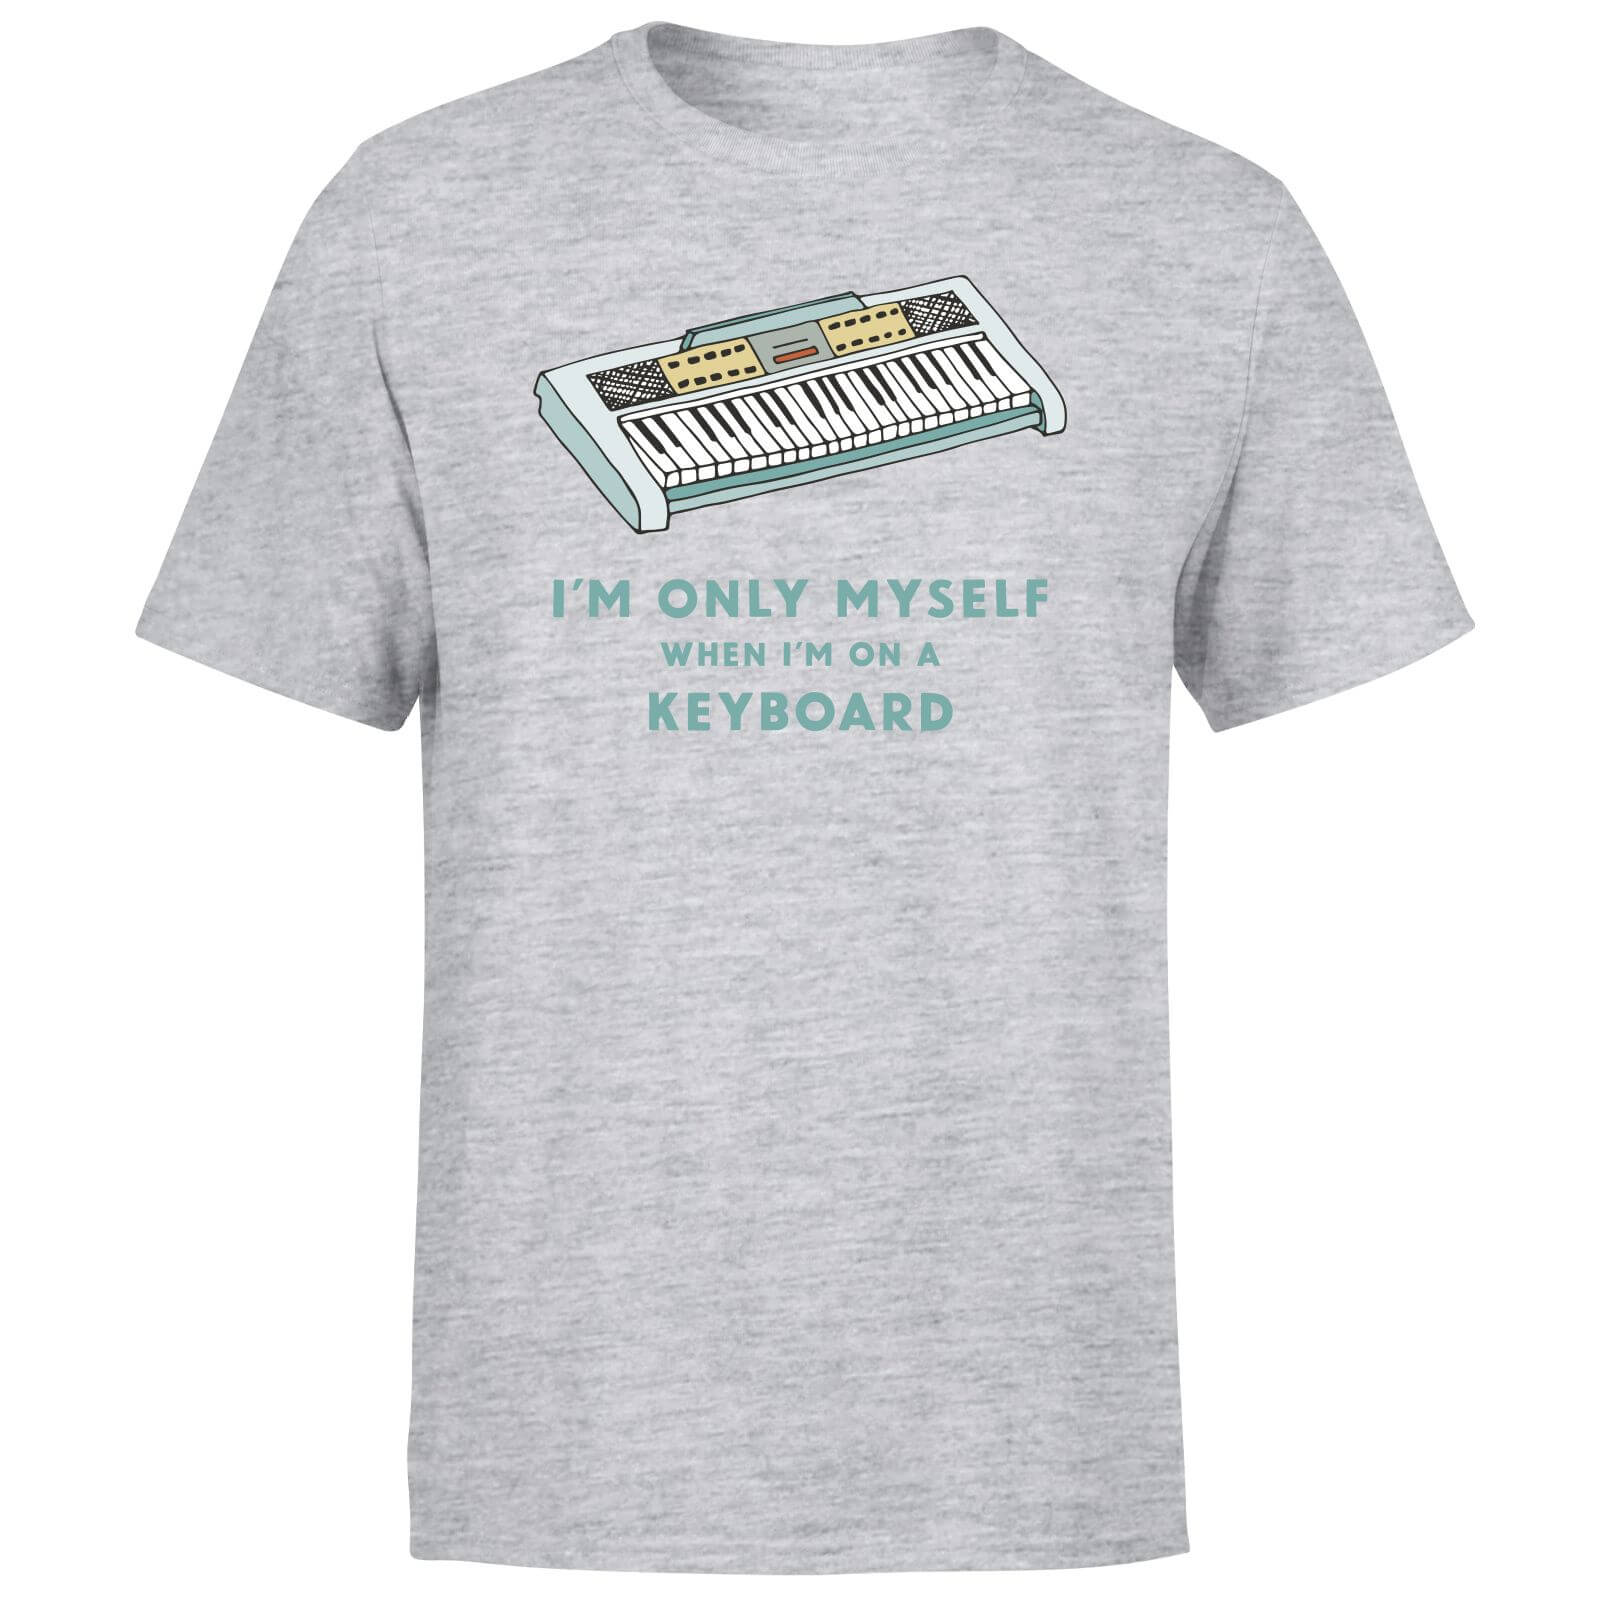 I'm Only Myself When I'm On A Keyboard Men's T-Shirt - Grey - XS - Grey